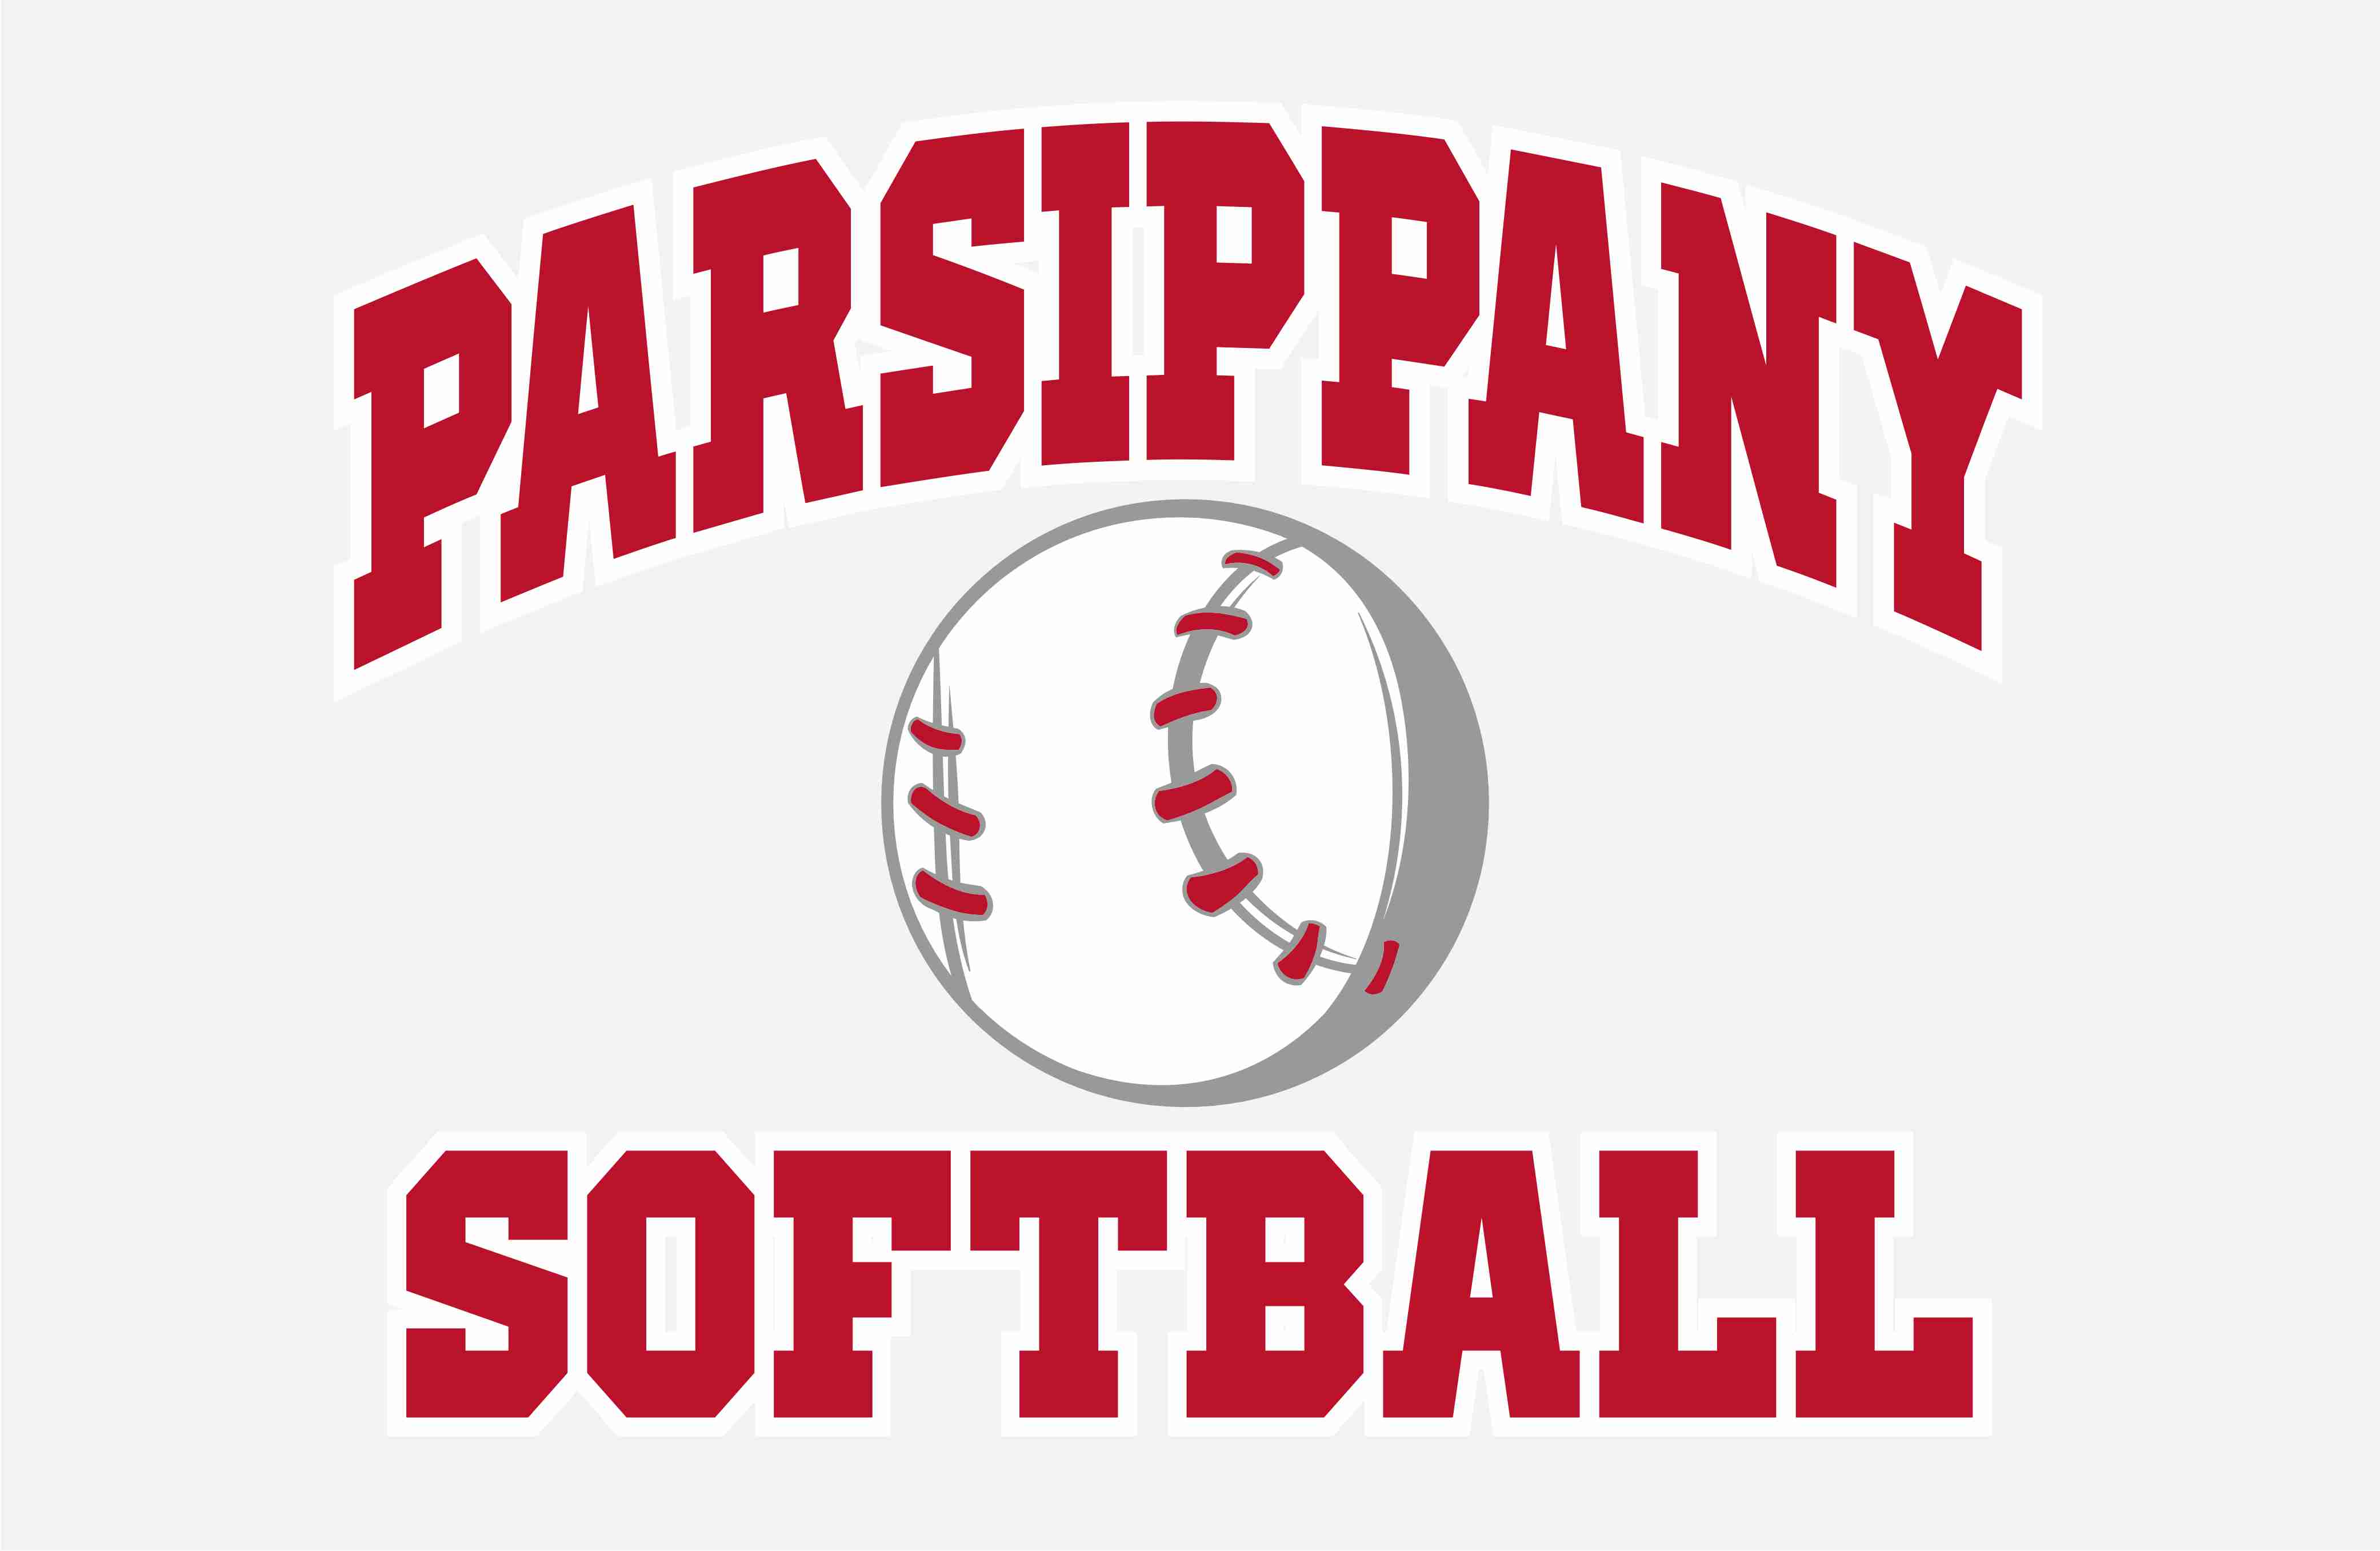 Parsippany Redhawks Softball